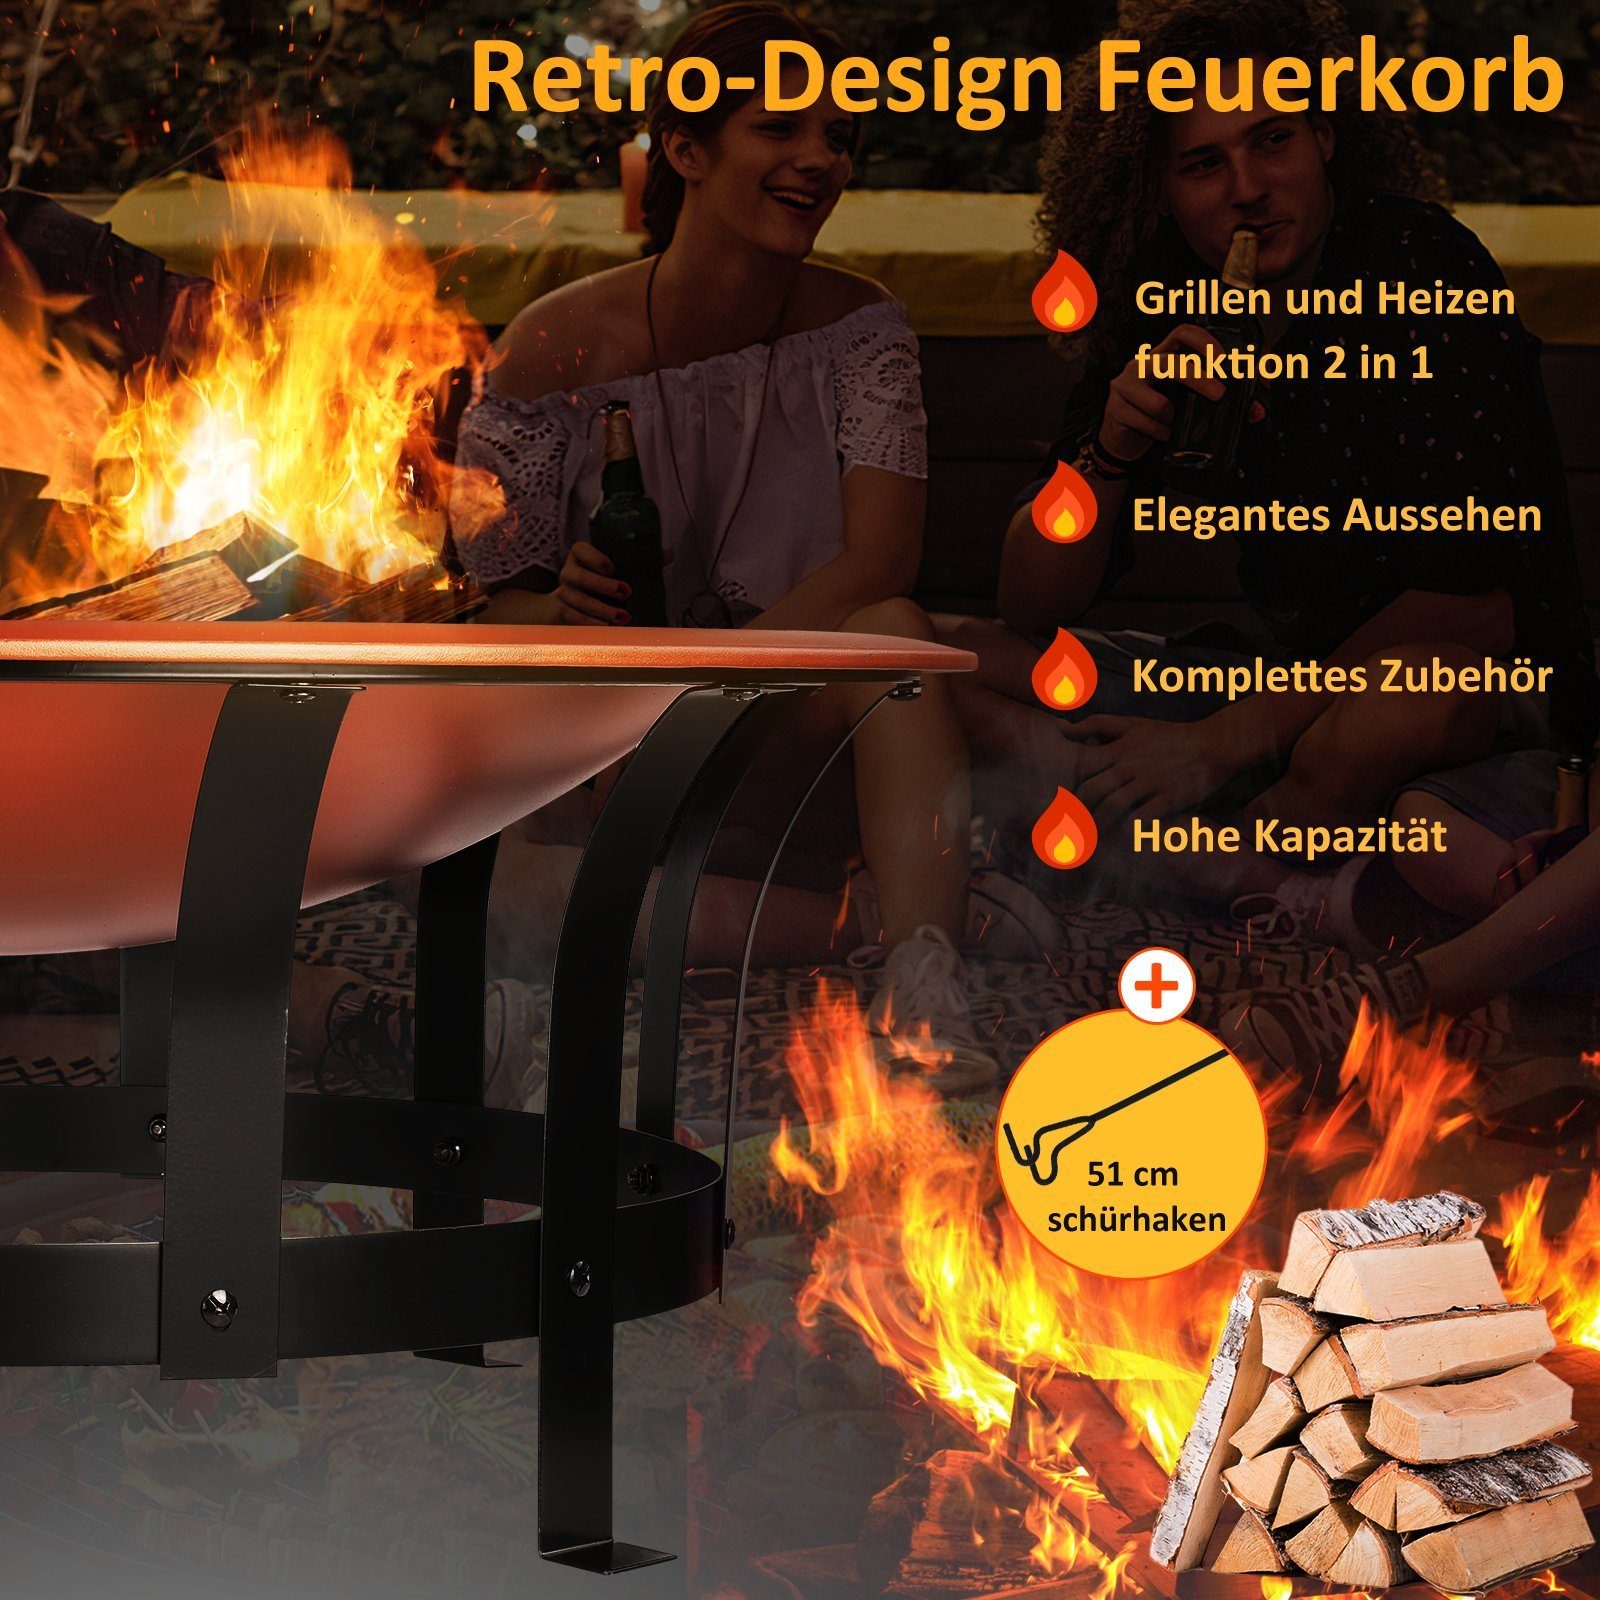 TLGREEN Feuerschale, Retro-Design Feuerkorb, 76cm mit Funkenschutz&Grillrost Kupferfarbe Feuerkorb, Ø